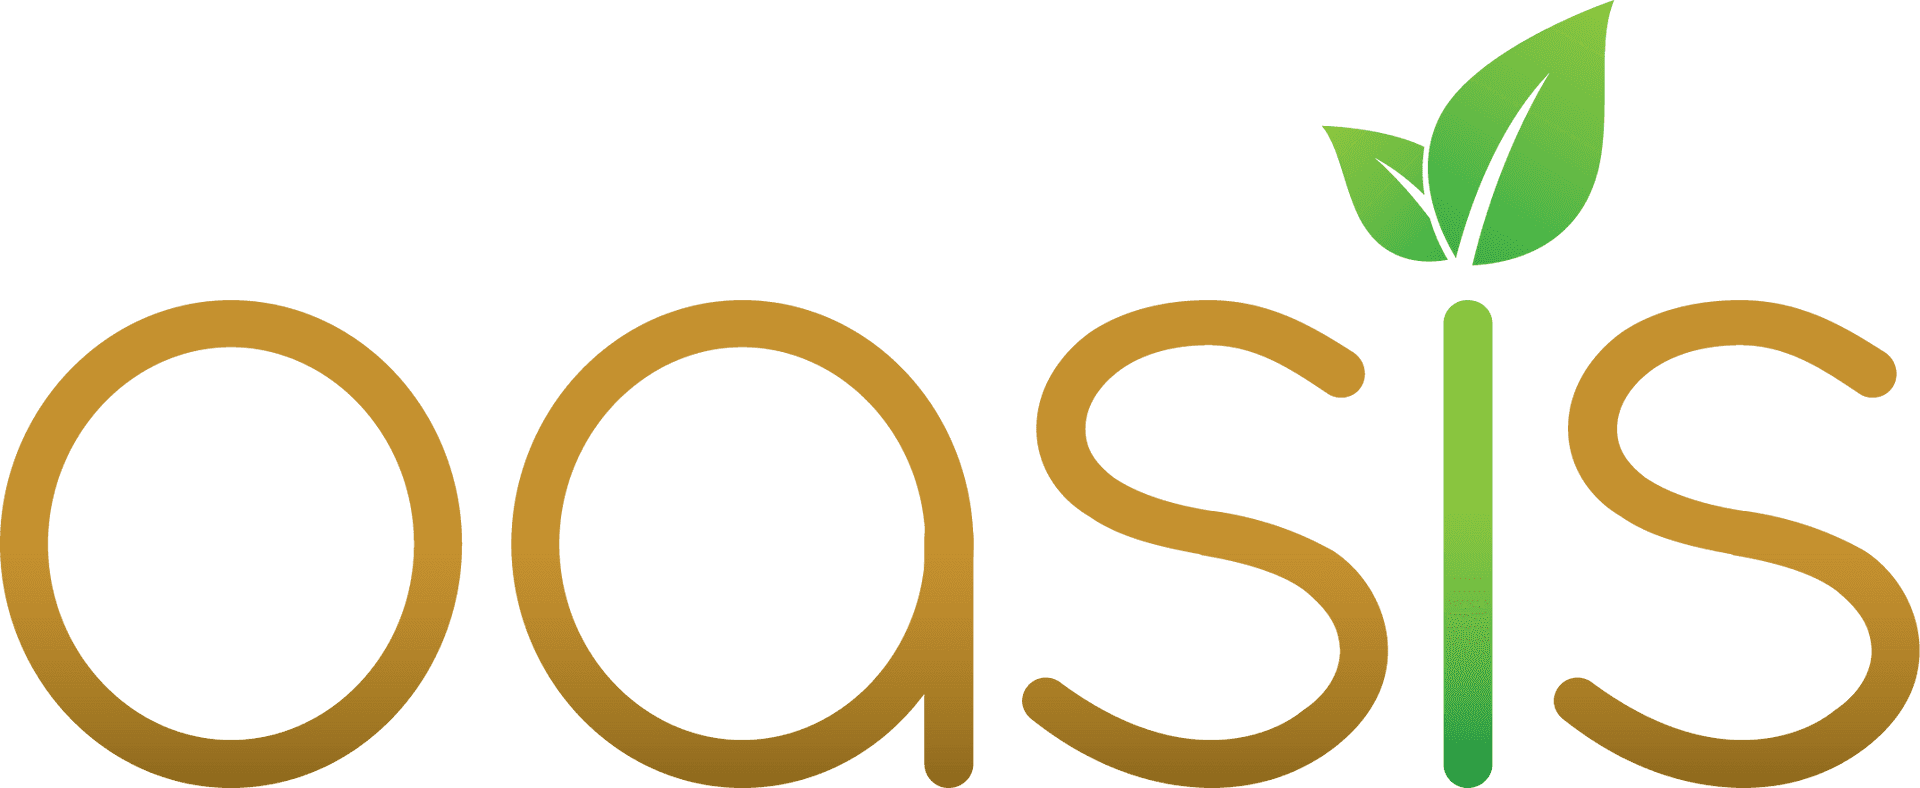 Oasis Brand Logo PNG image